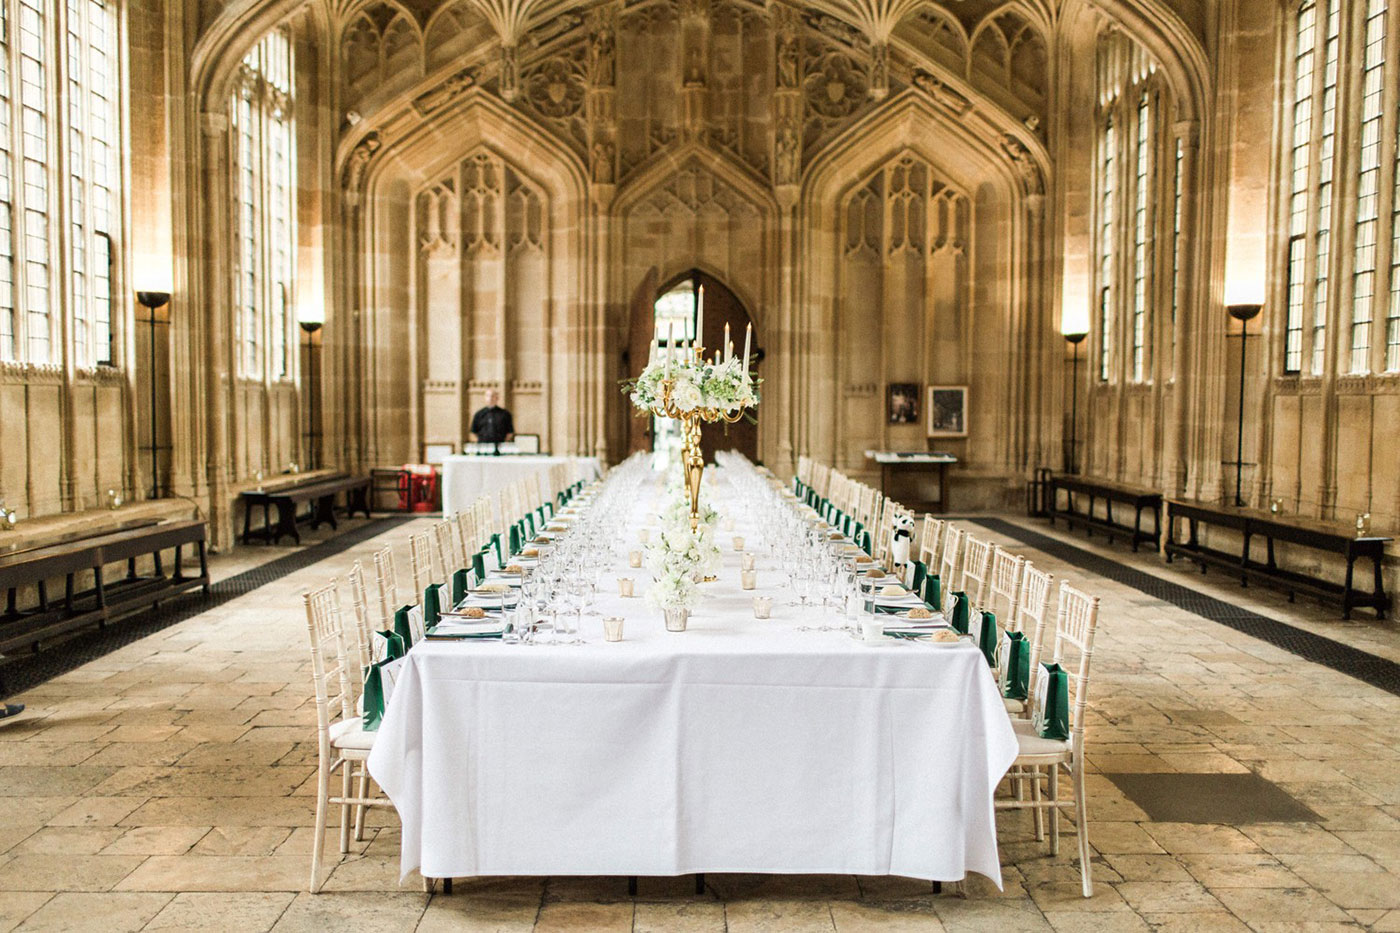 Bodleian Library Wedding Venue